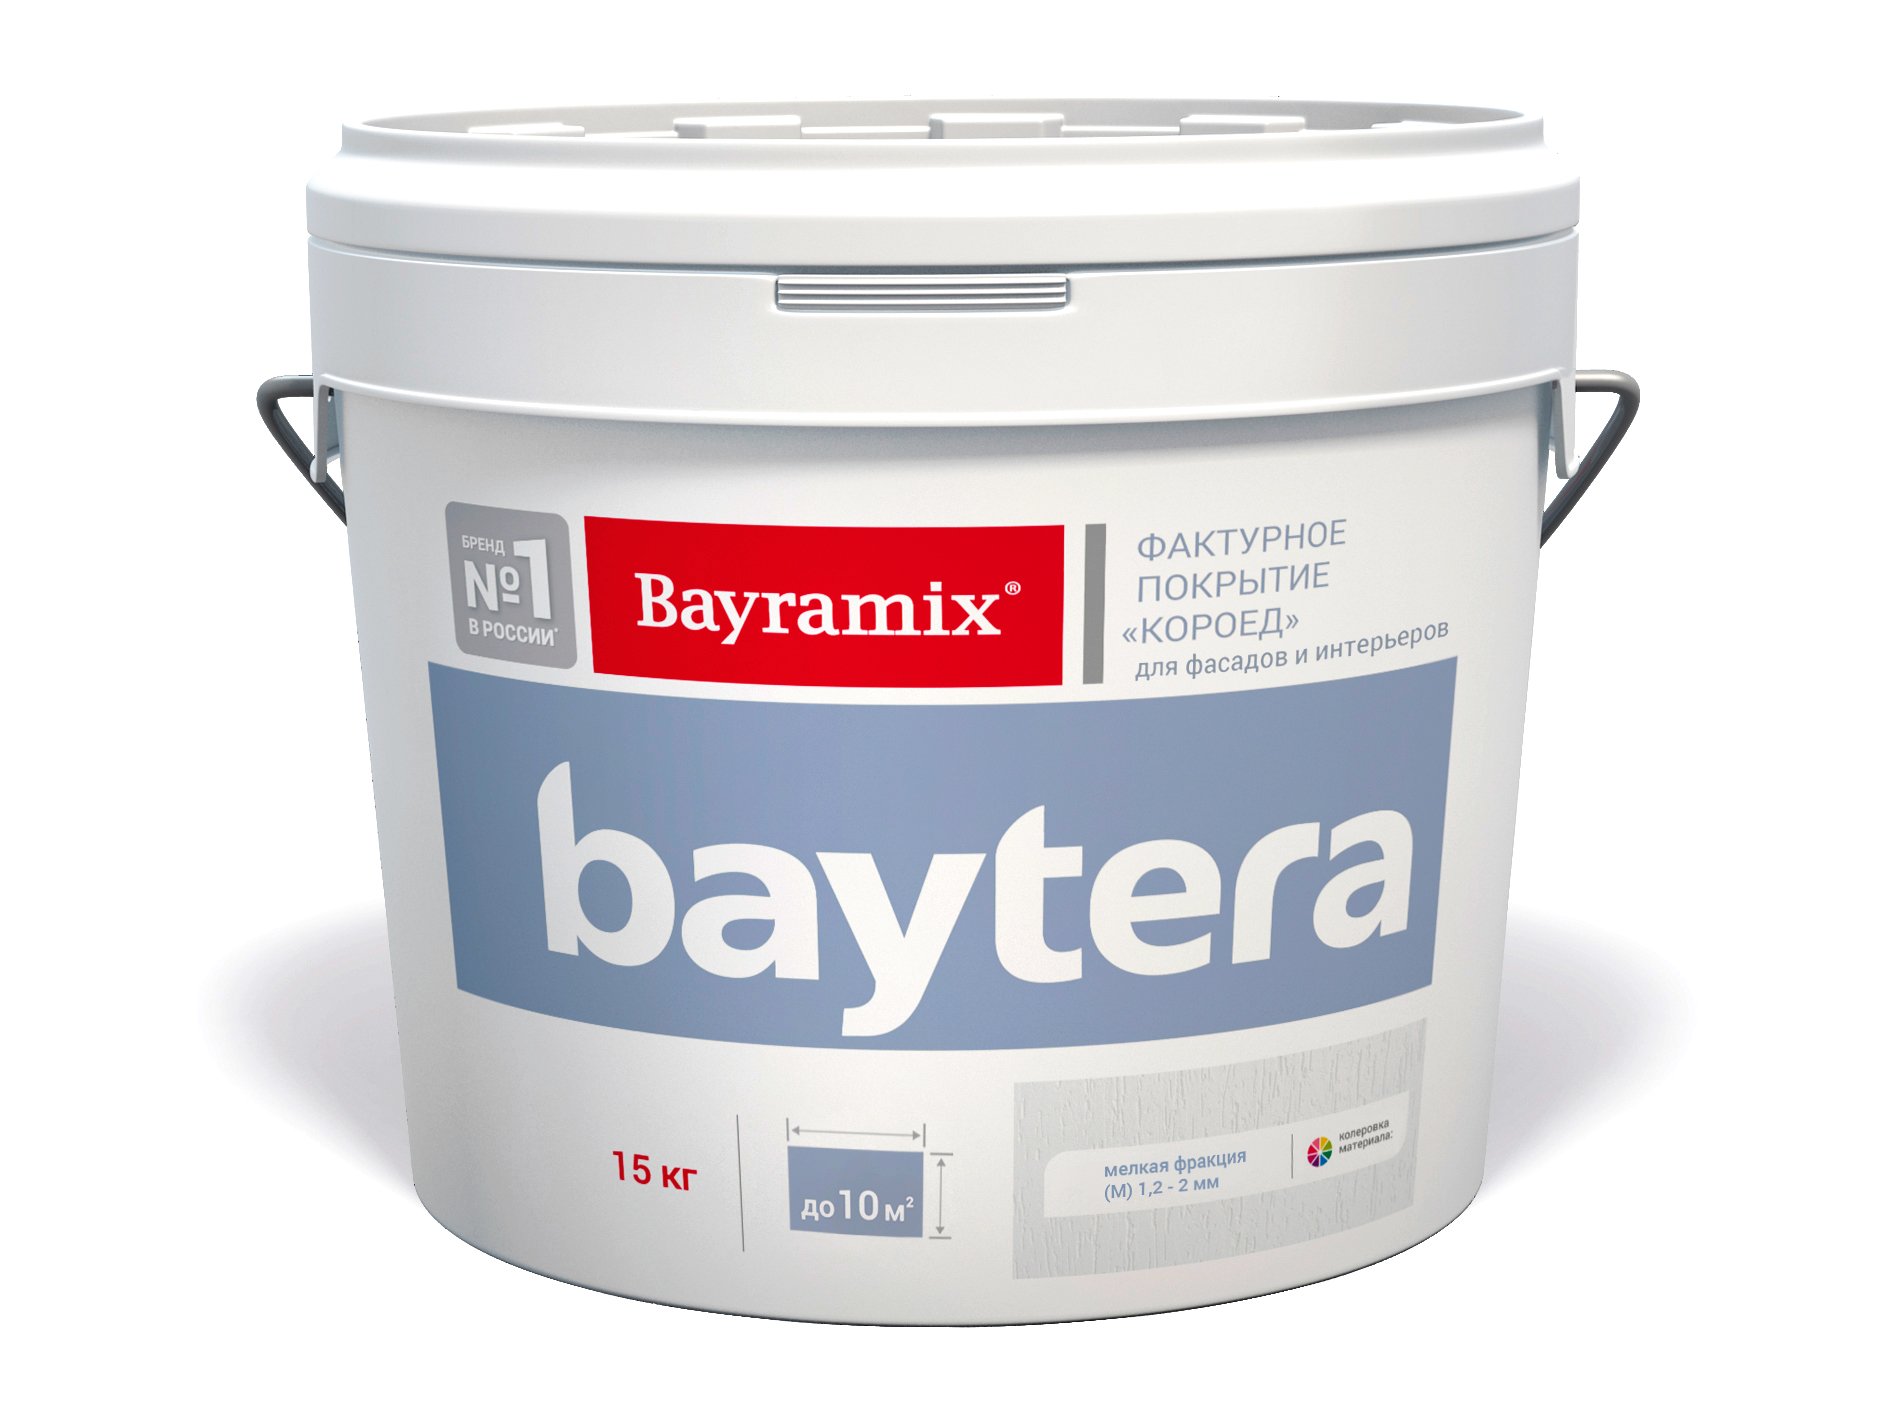 фото Акриловая штукатурка короед bayramix baytera, (мелкая), 15 кг